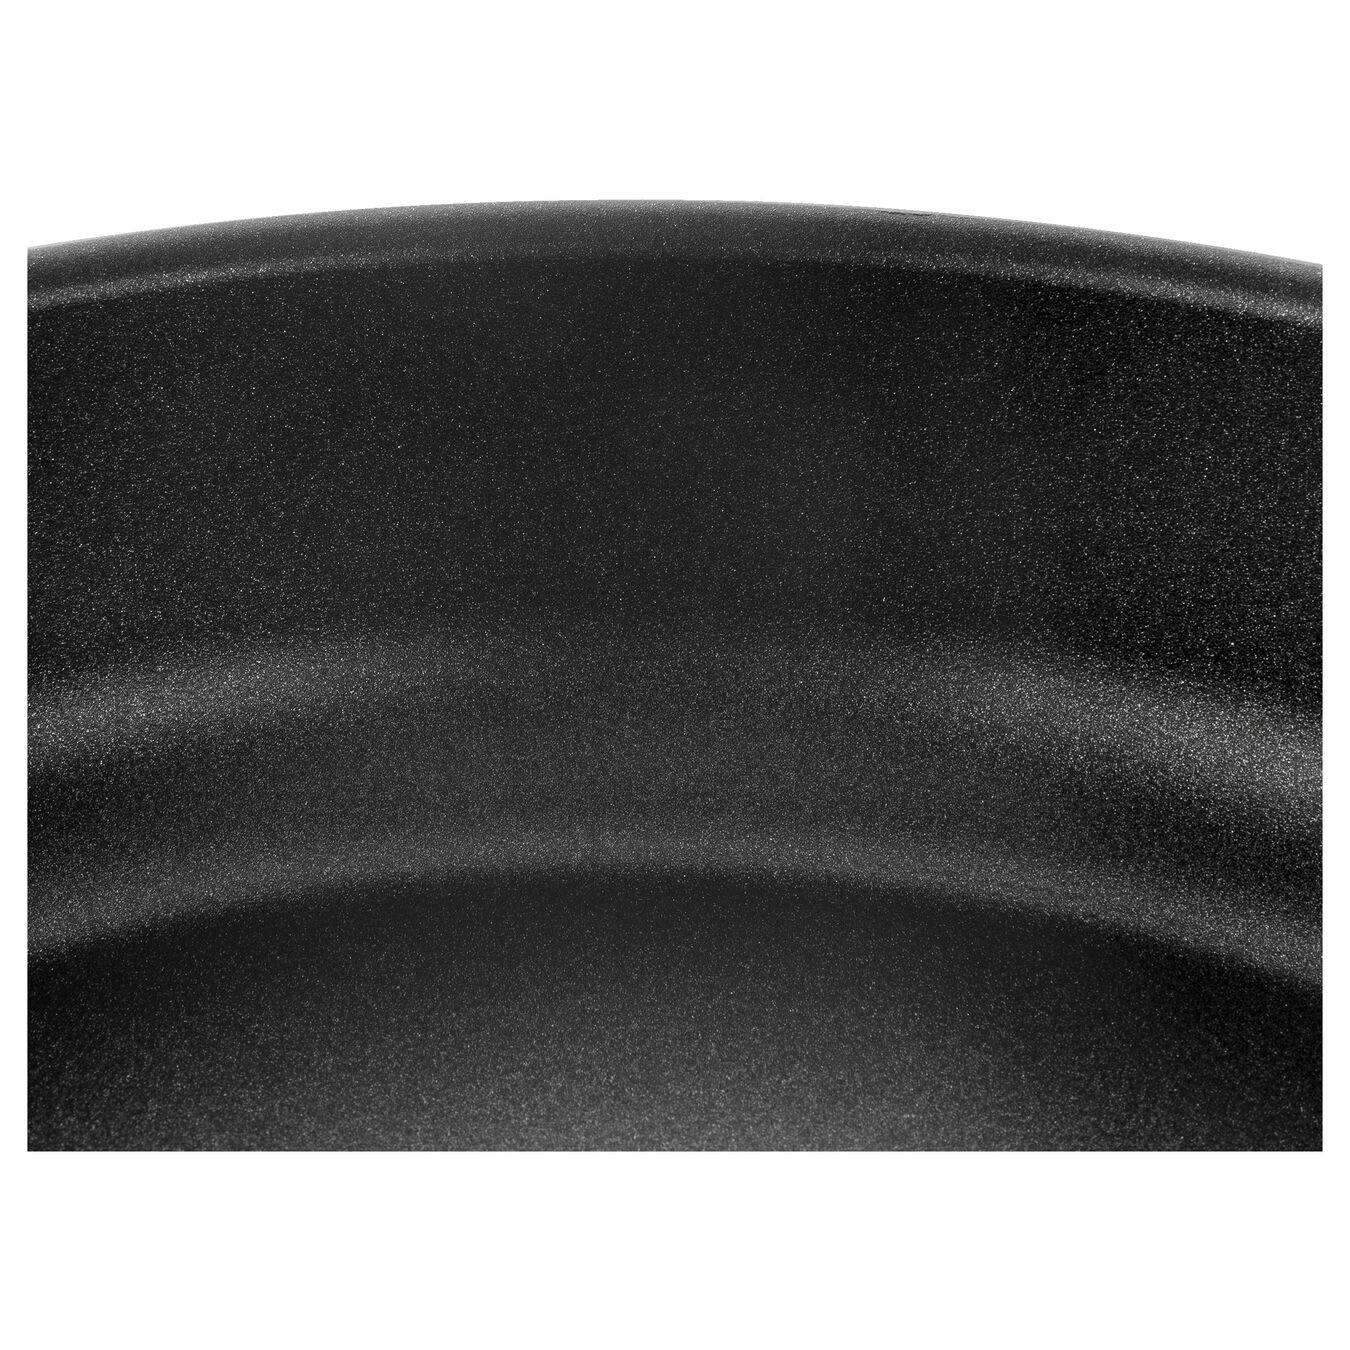 28 cm Aluminium Frying pan with lid black,,large 5